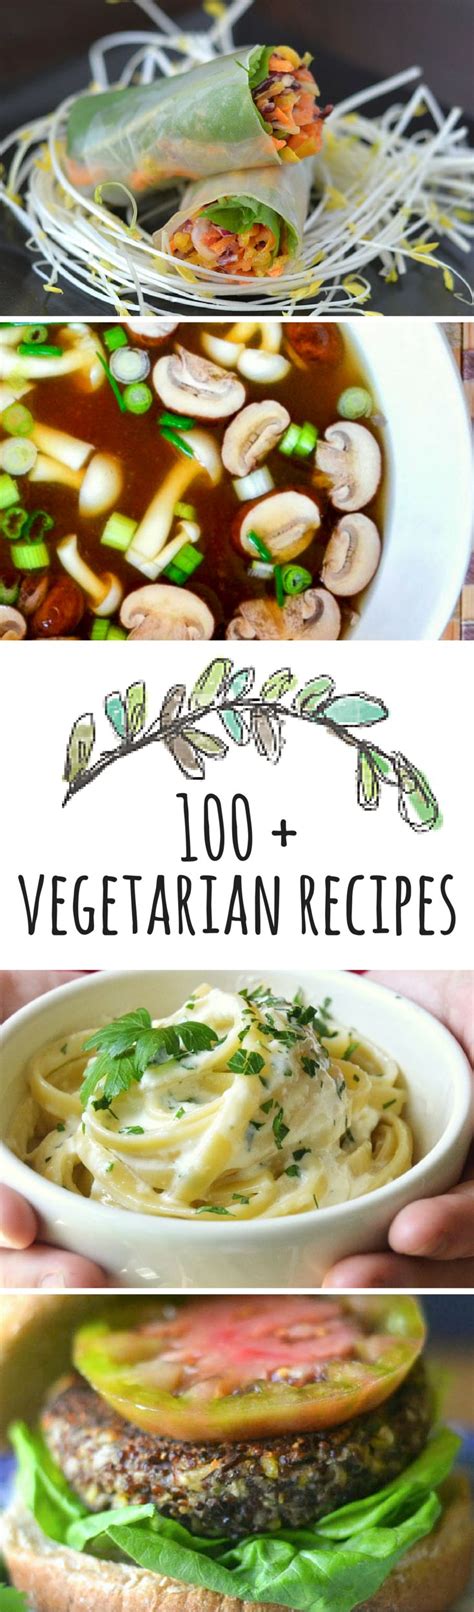 Lacto ovo vegetarian dishes photo sharing 2014 guai shu shu. Lacto Ovo Vegetarian Dinner Recipes / The top 20 Ideas ...